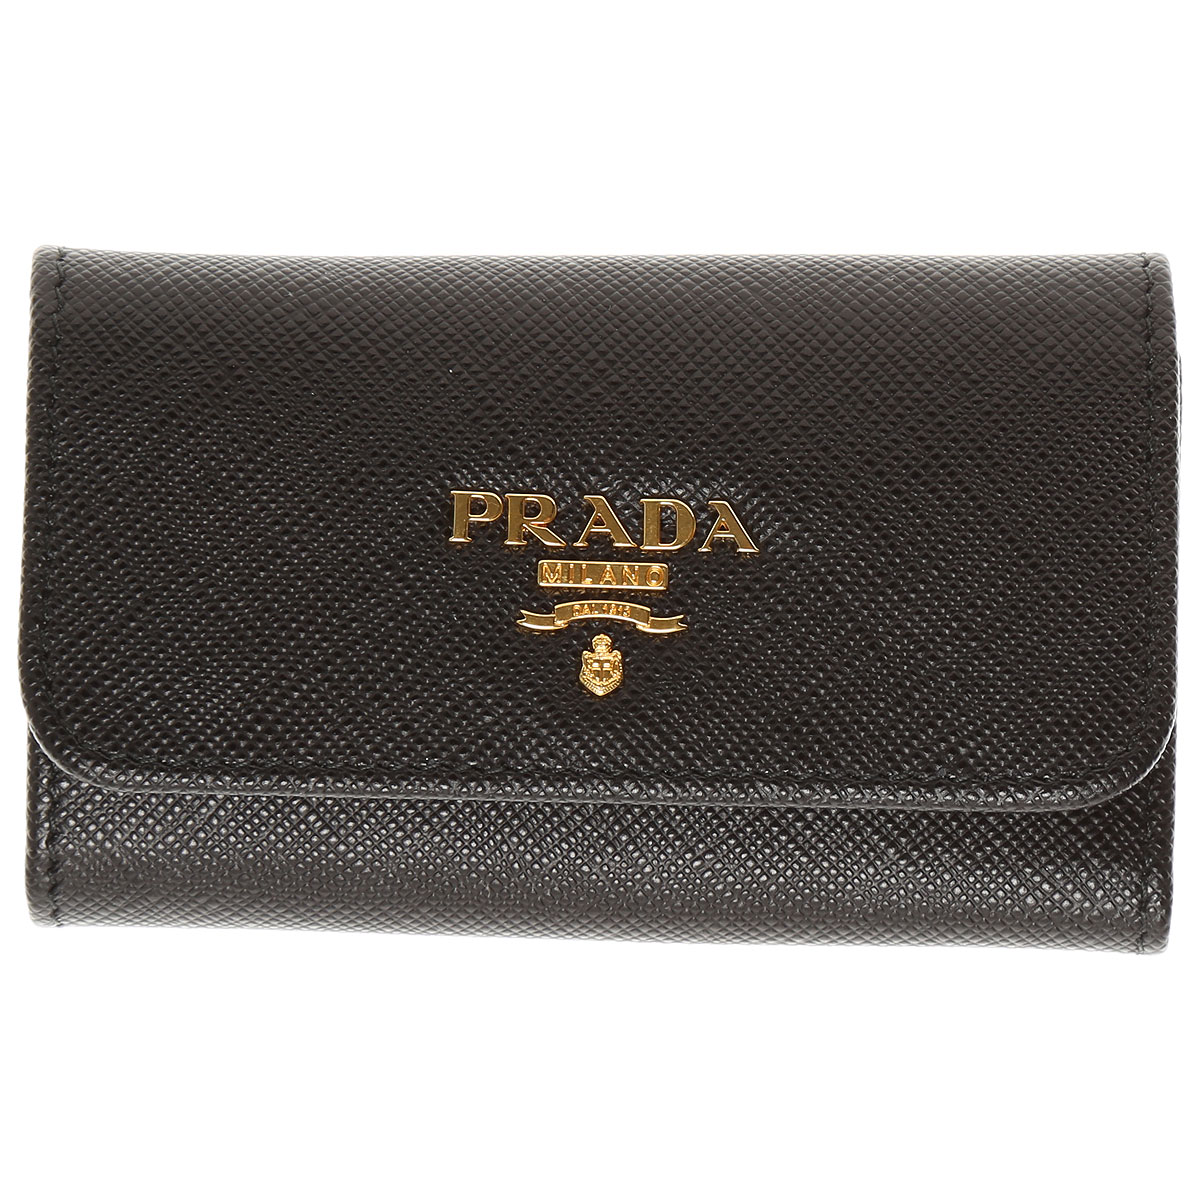 Womens Wallets Prada, Style code: 1pg222-qwa-002